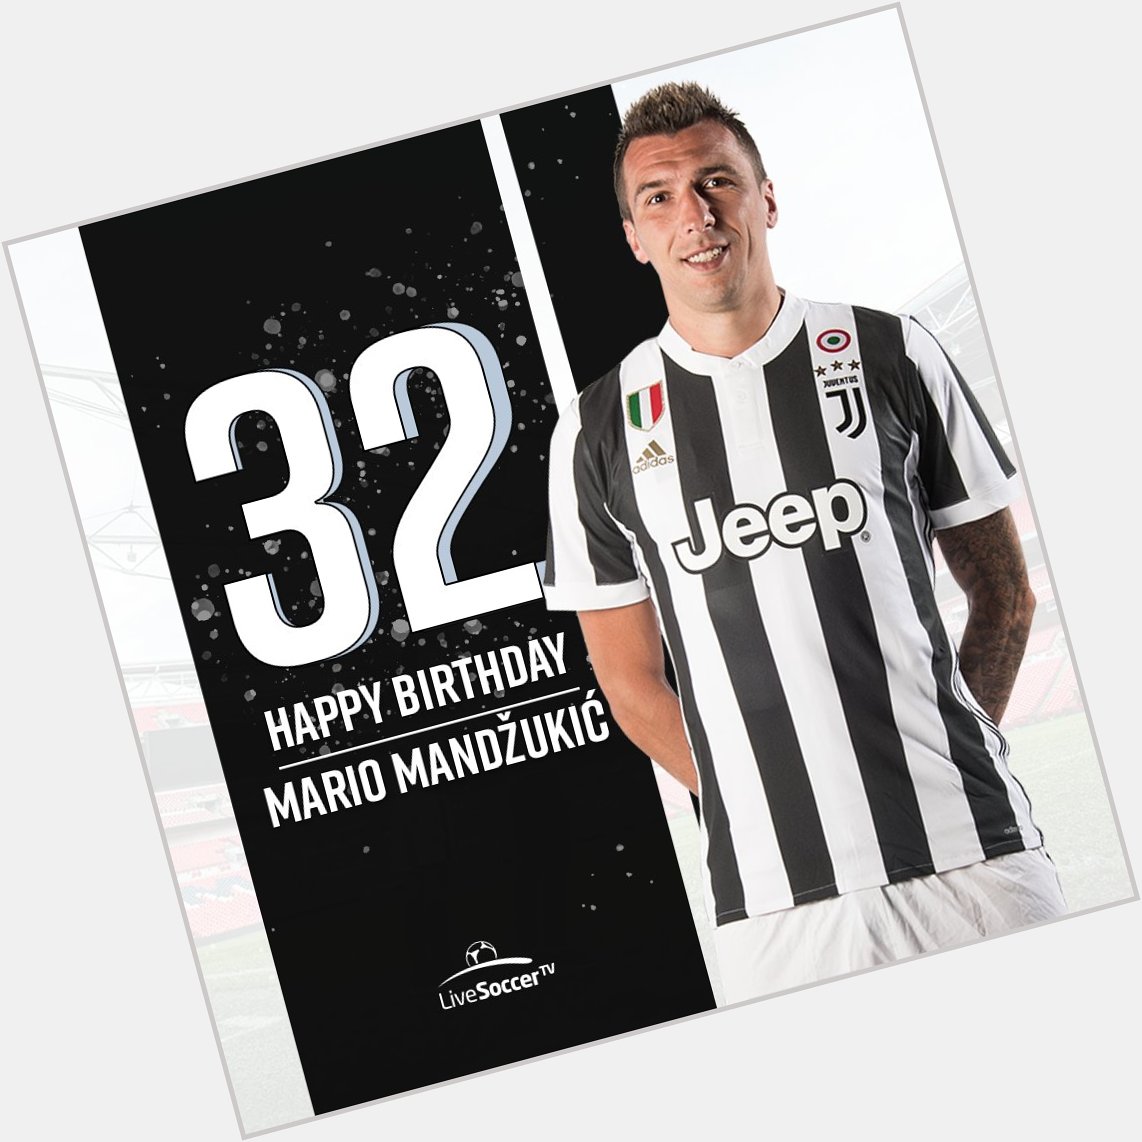 Happy birthday to Mario Mandzukic!! One of Europe\s finest strikers! 